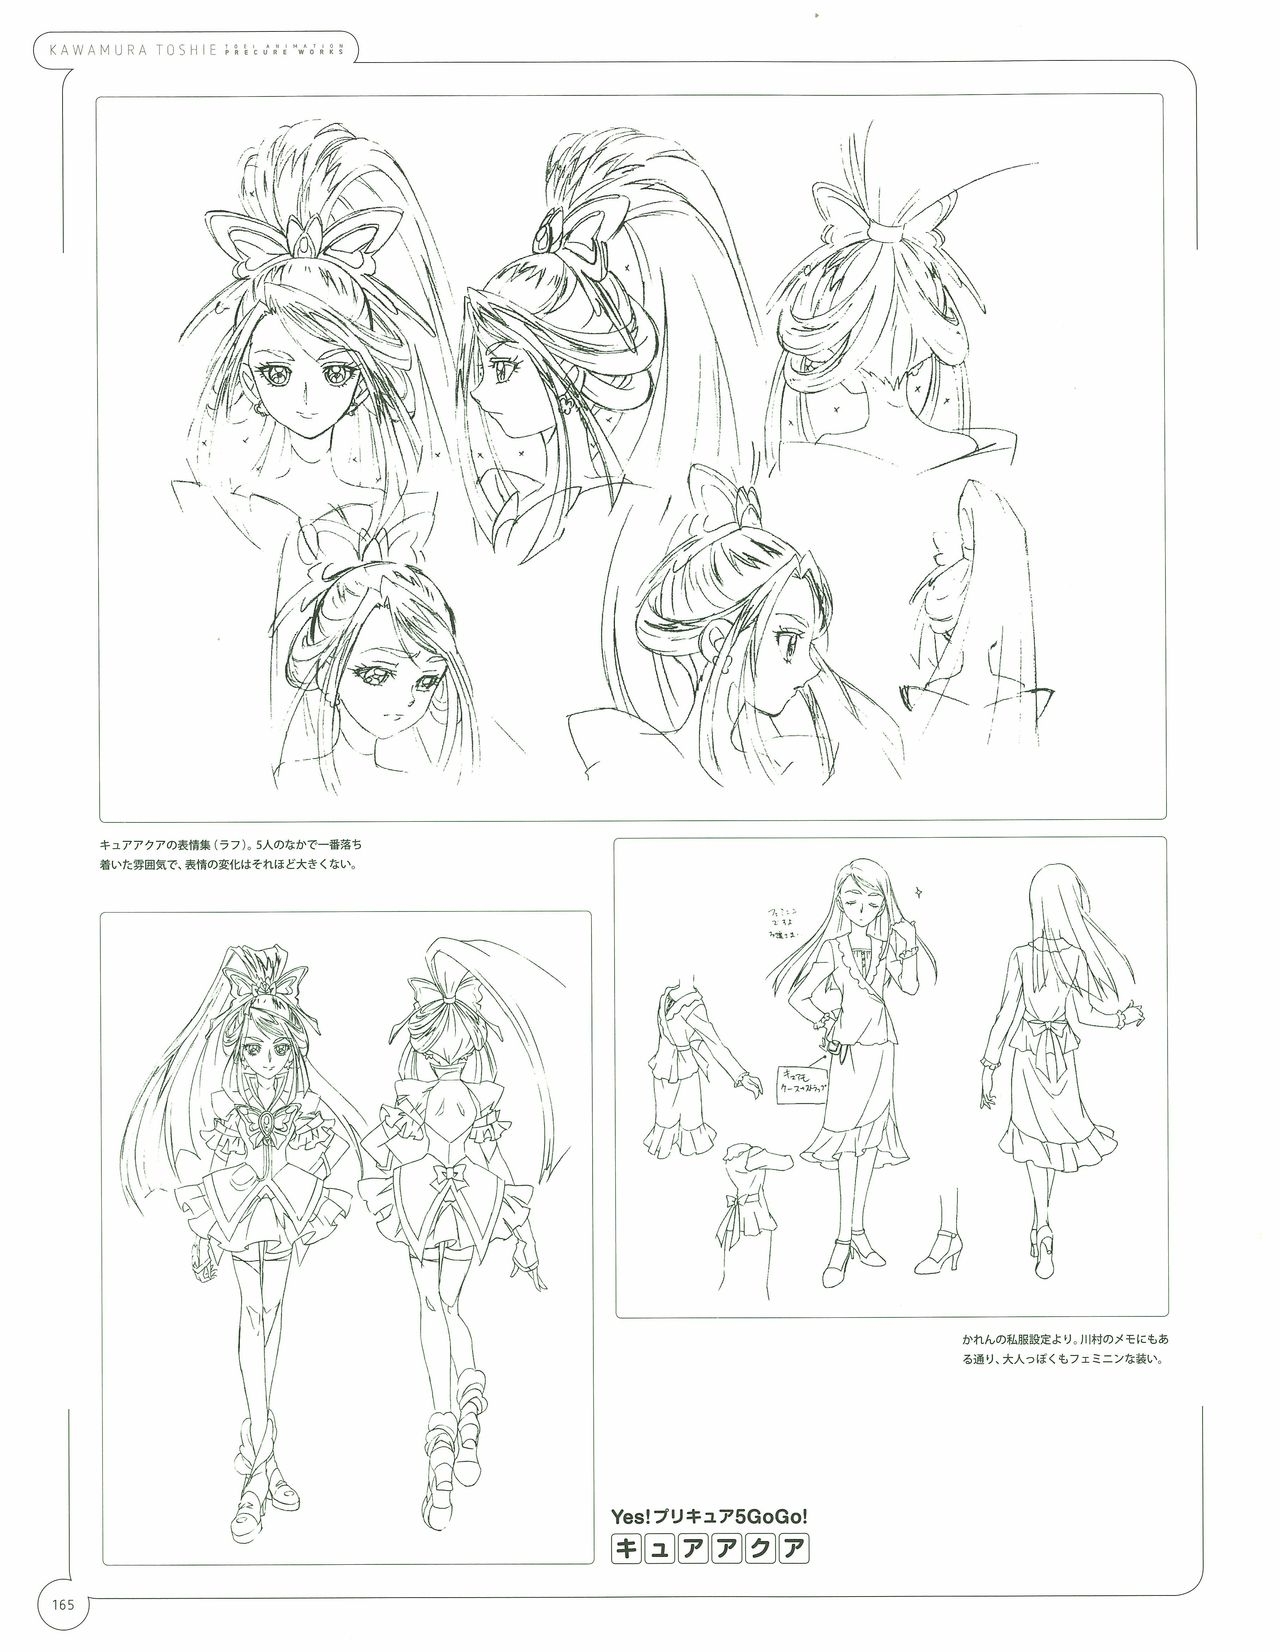 Kawamura Toshie - Toei Animation Precure Works 165